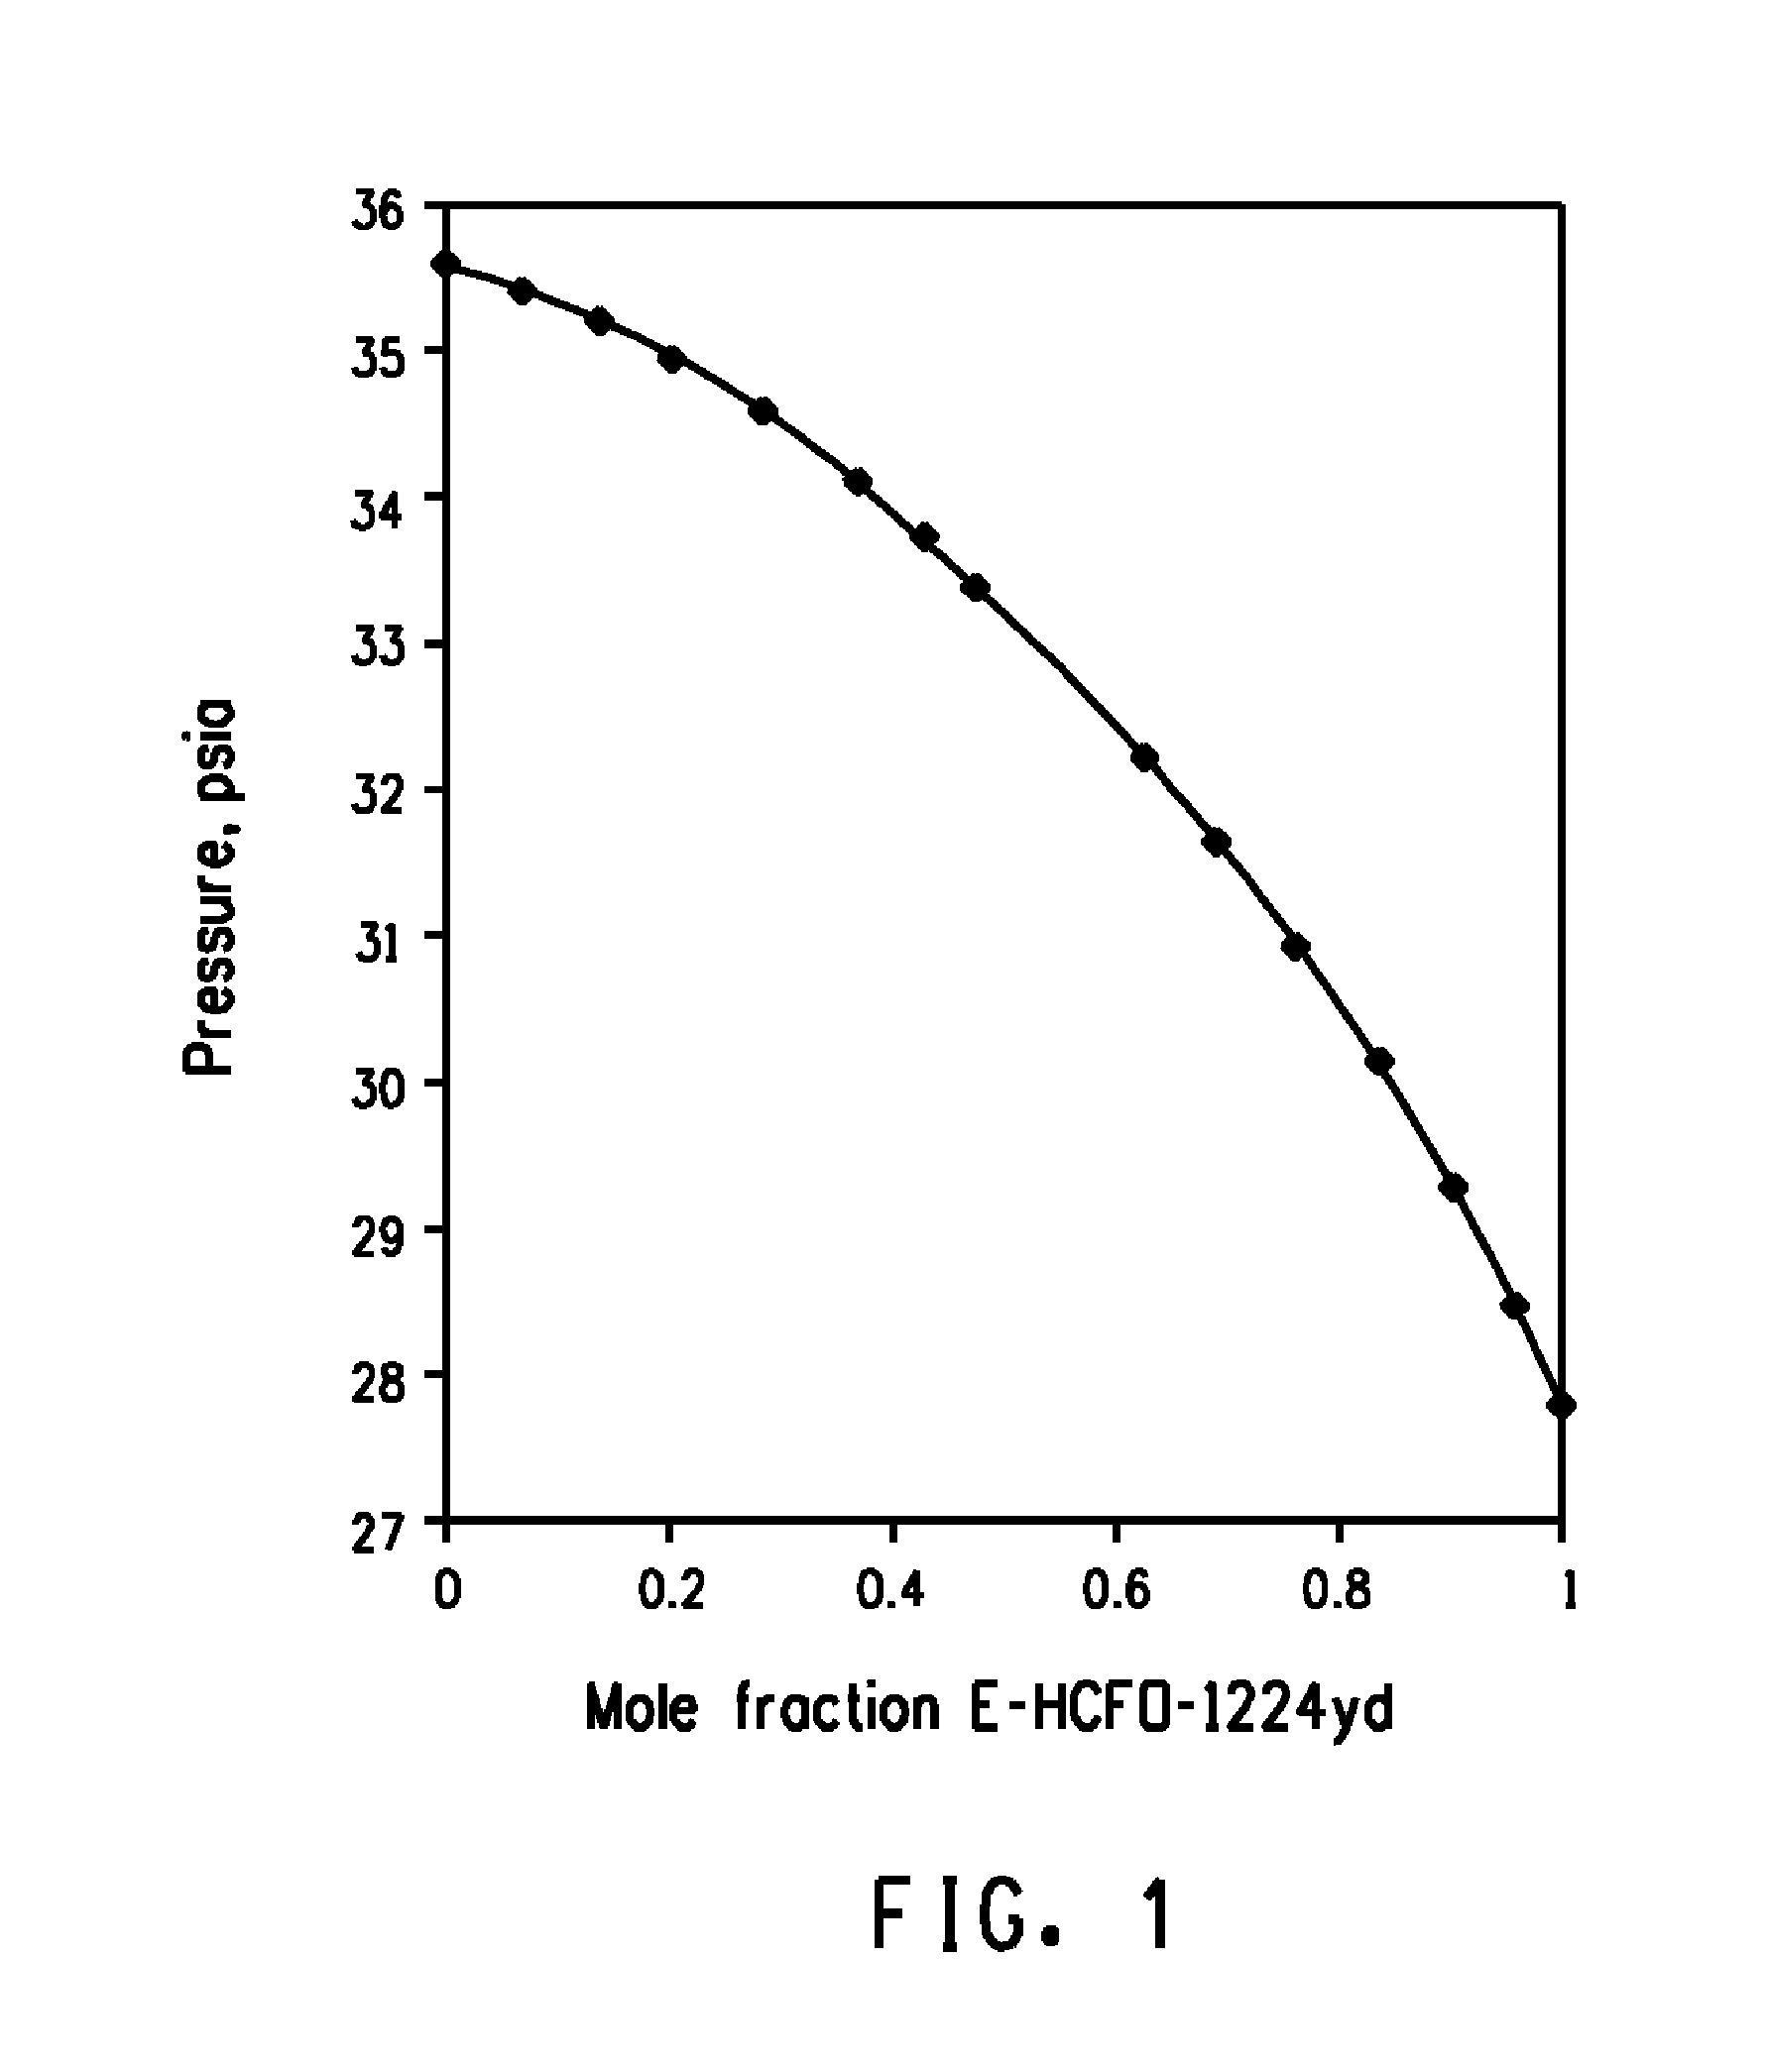 Azeotrope-like compositions of e-1-chloro-2,3,3,3-tetrafluoropropene and uses thereof